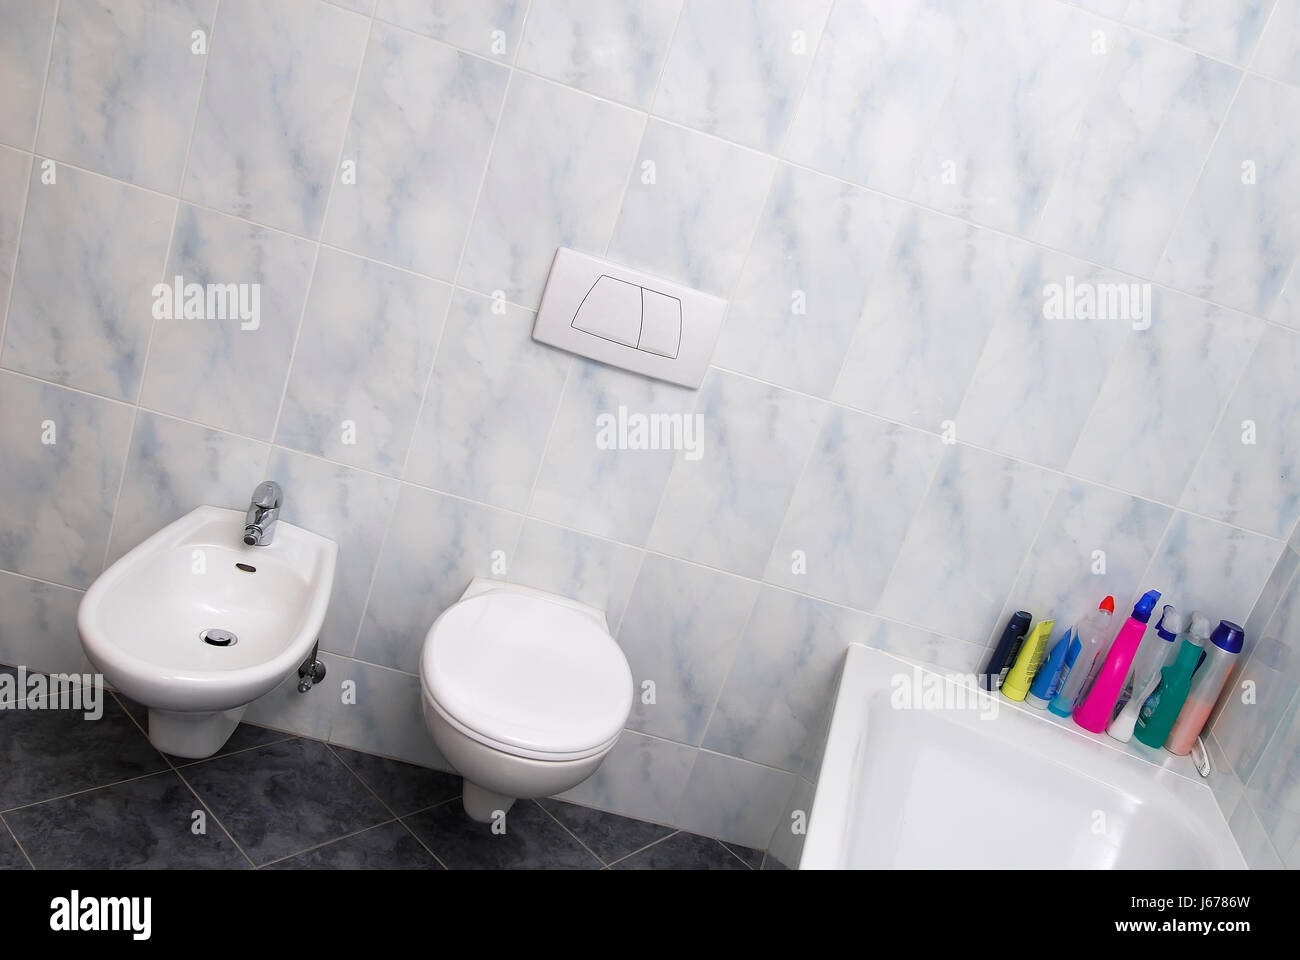 flow ceramic tiles toilet washroom bidet bathroom flow ceramic tiles toilet  Stock Photo - Alamy